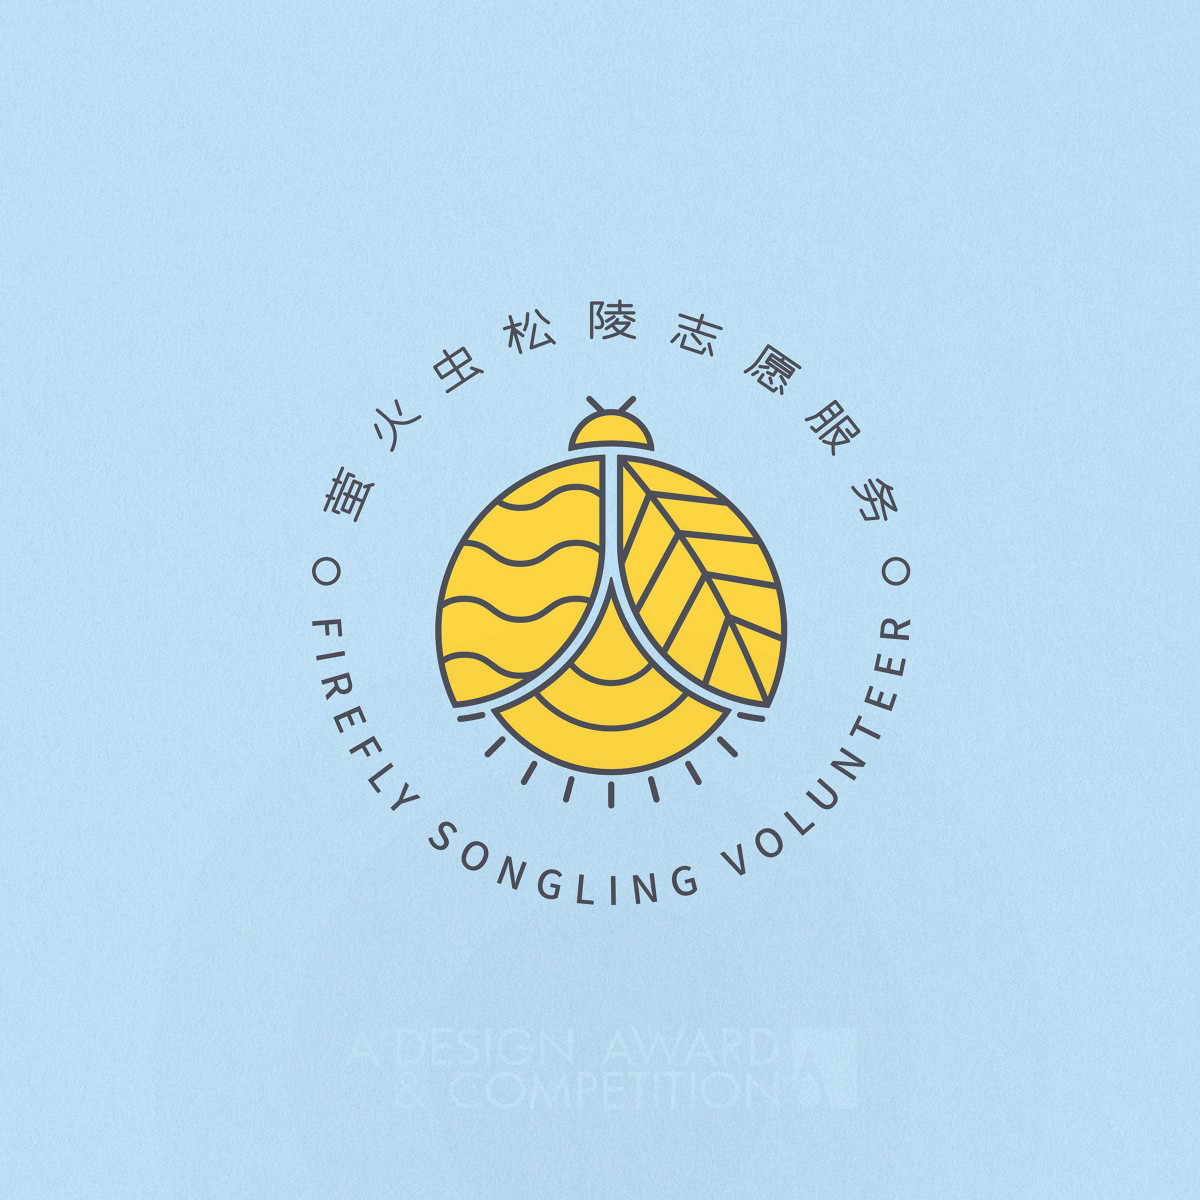 Firefly Songling Volunteer Branding by Suzhou SoFeng Design Co  Ltd 